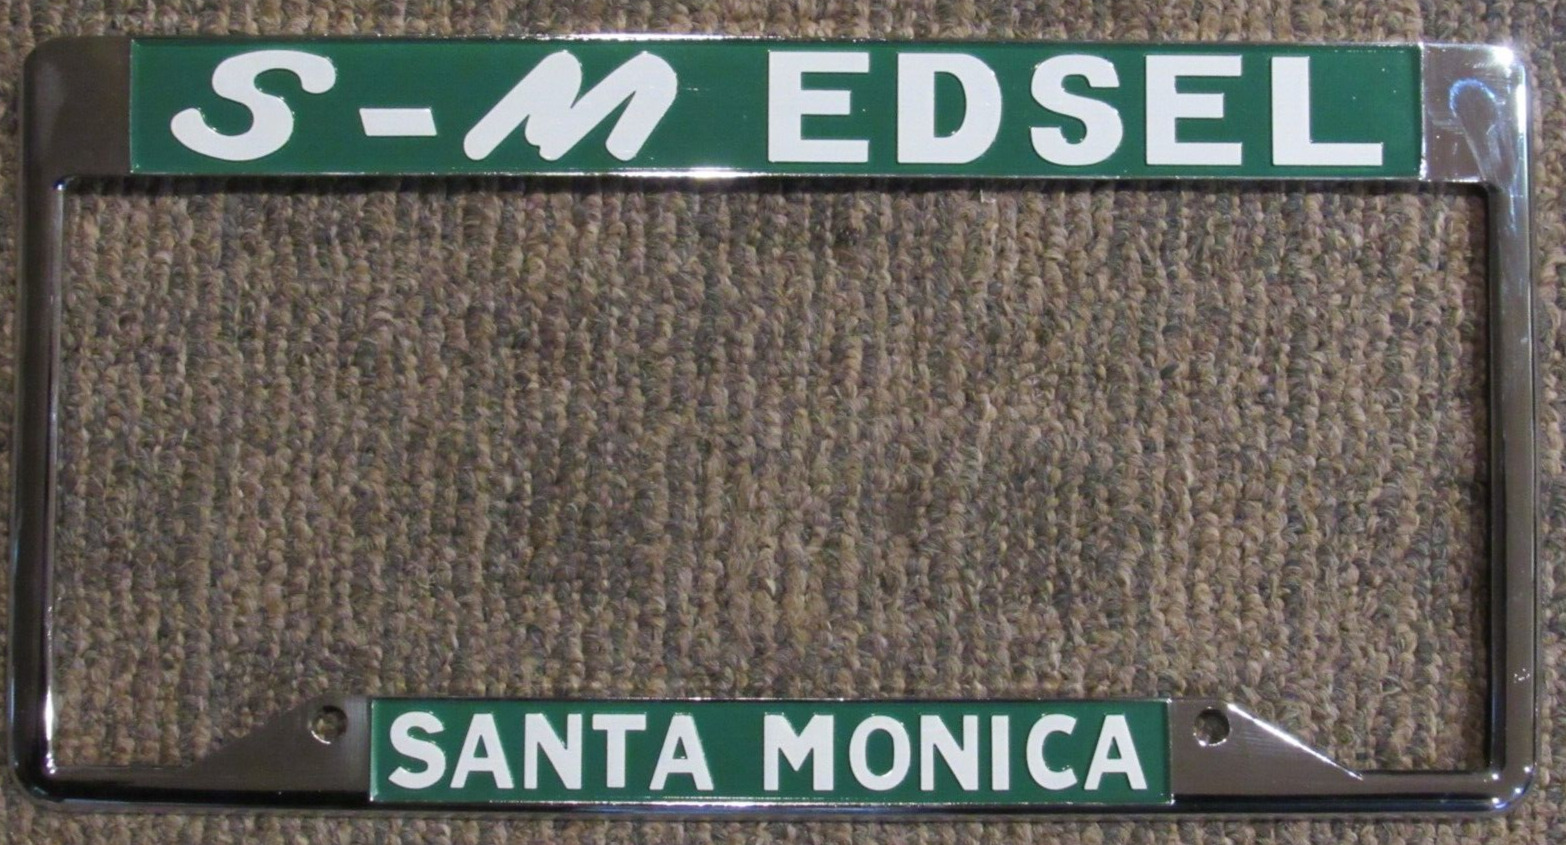 NEW Santa Monica S-M Edsel License Plate Frame Embossed Metal Deco Cool Chrome